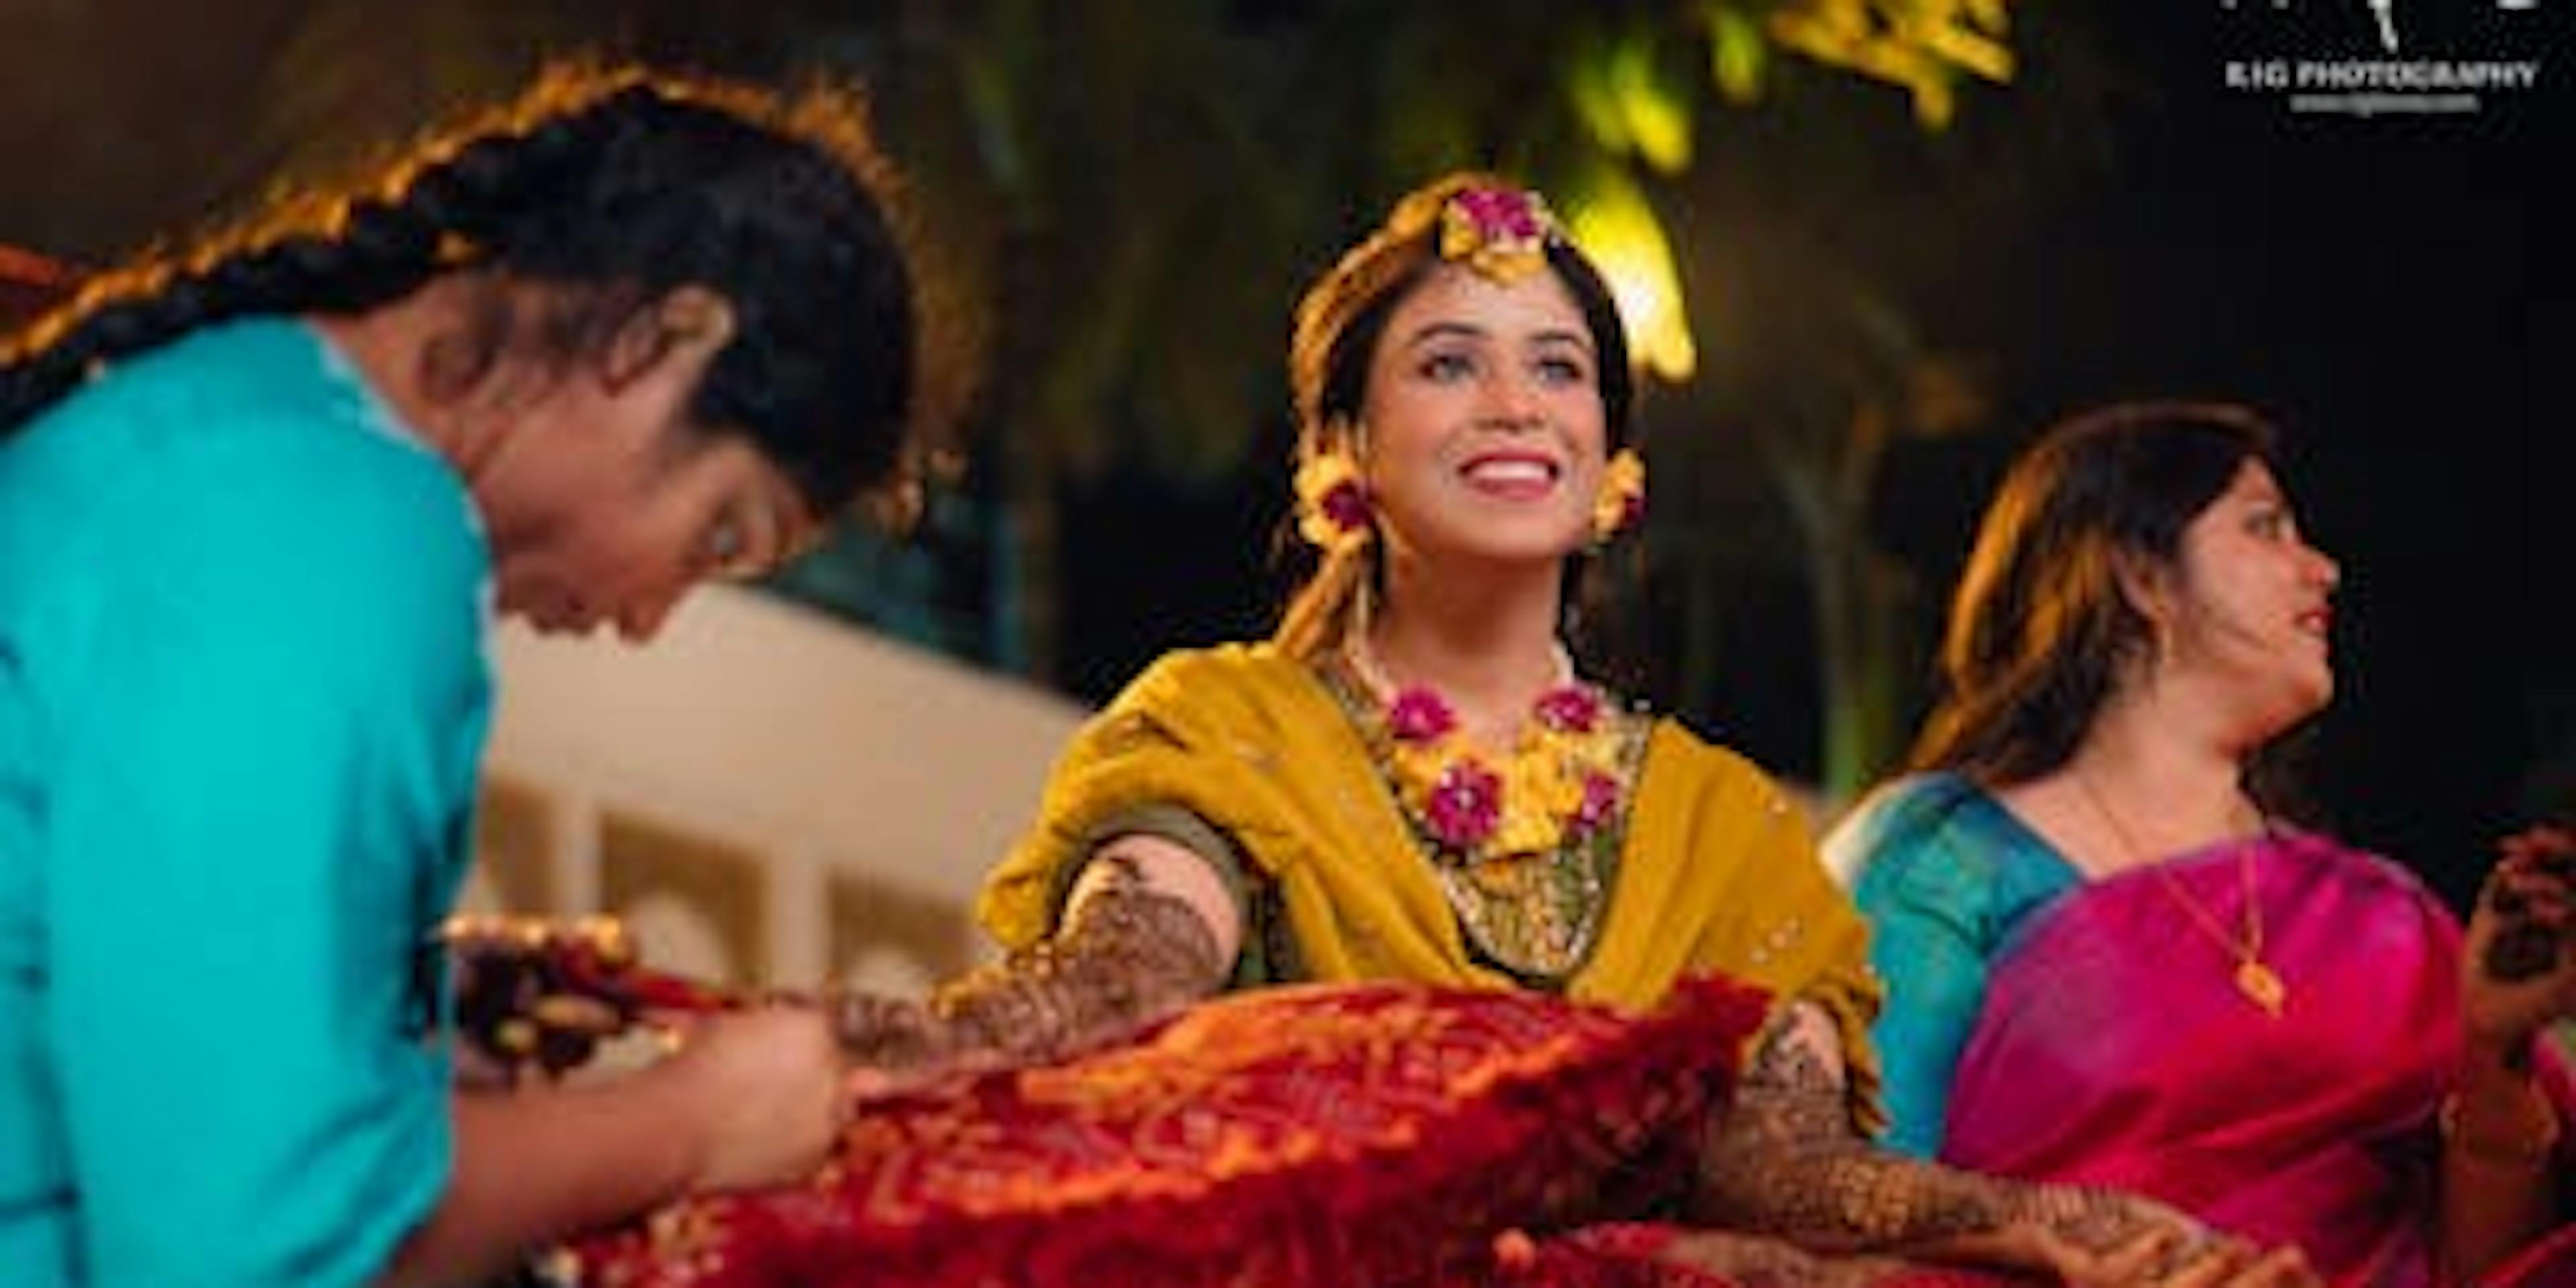 10 Best Bridal Mehendi Artists In Kolkata You Need To Know